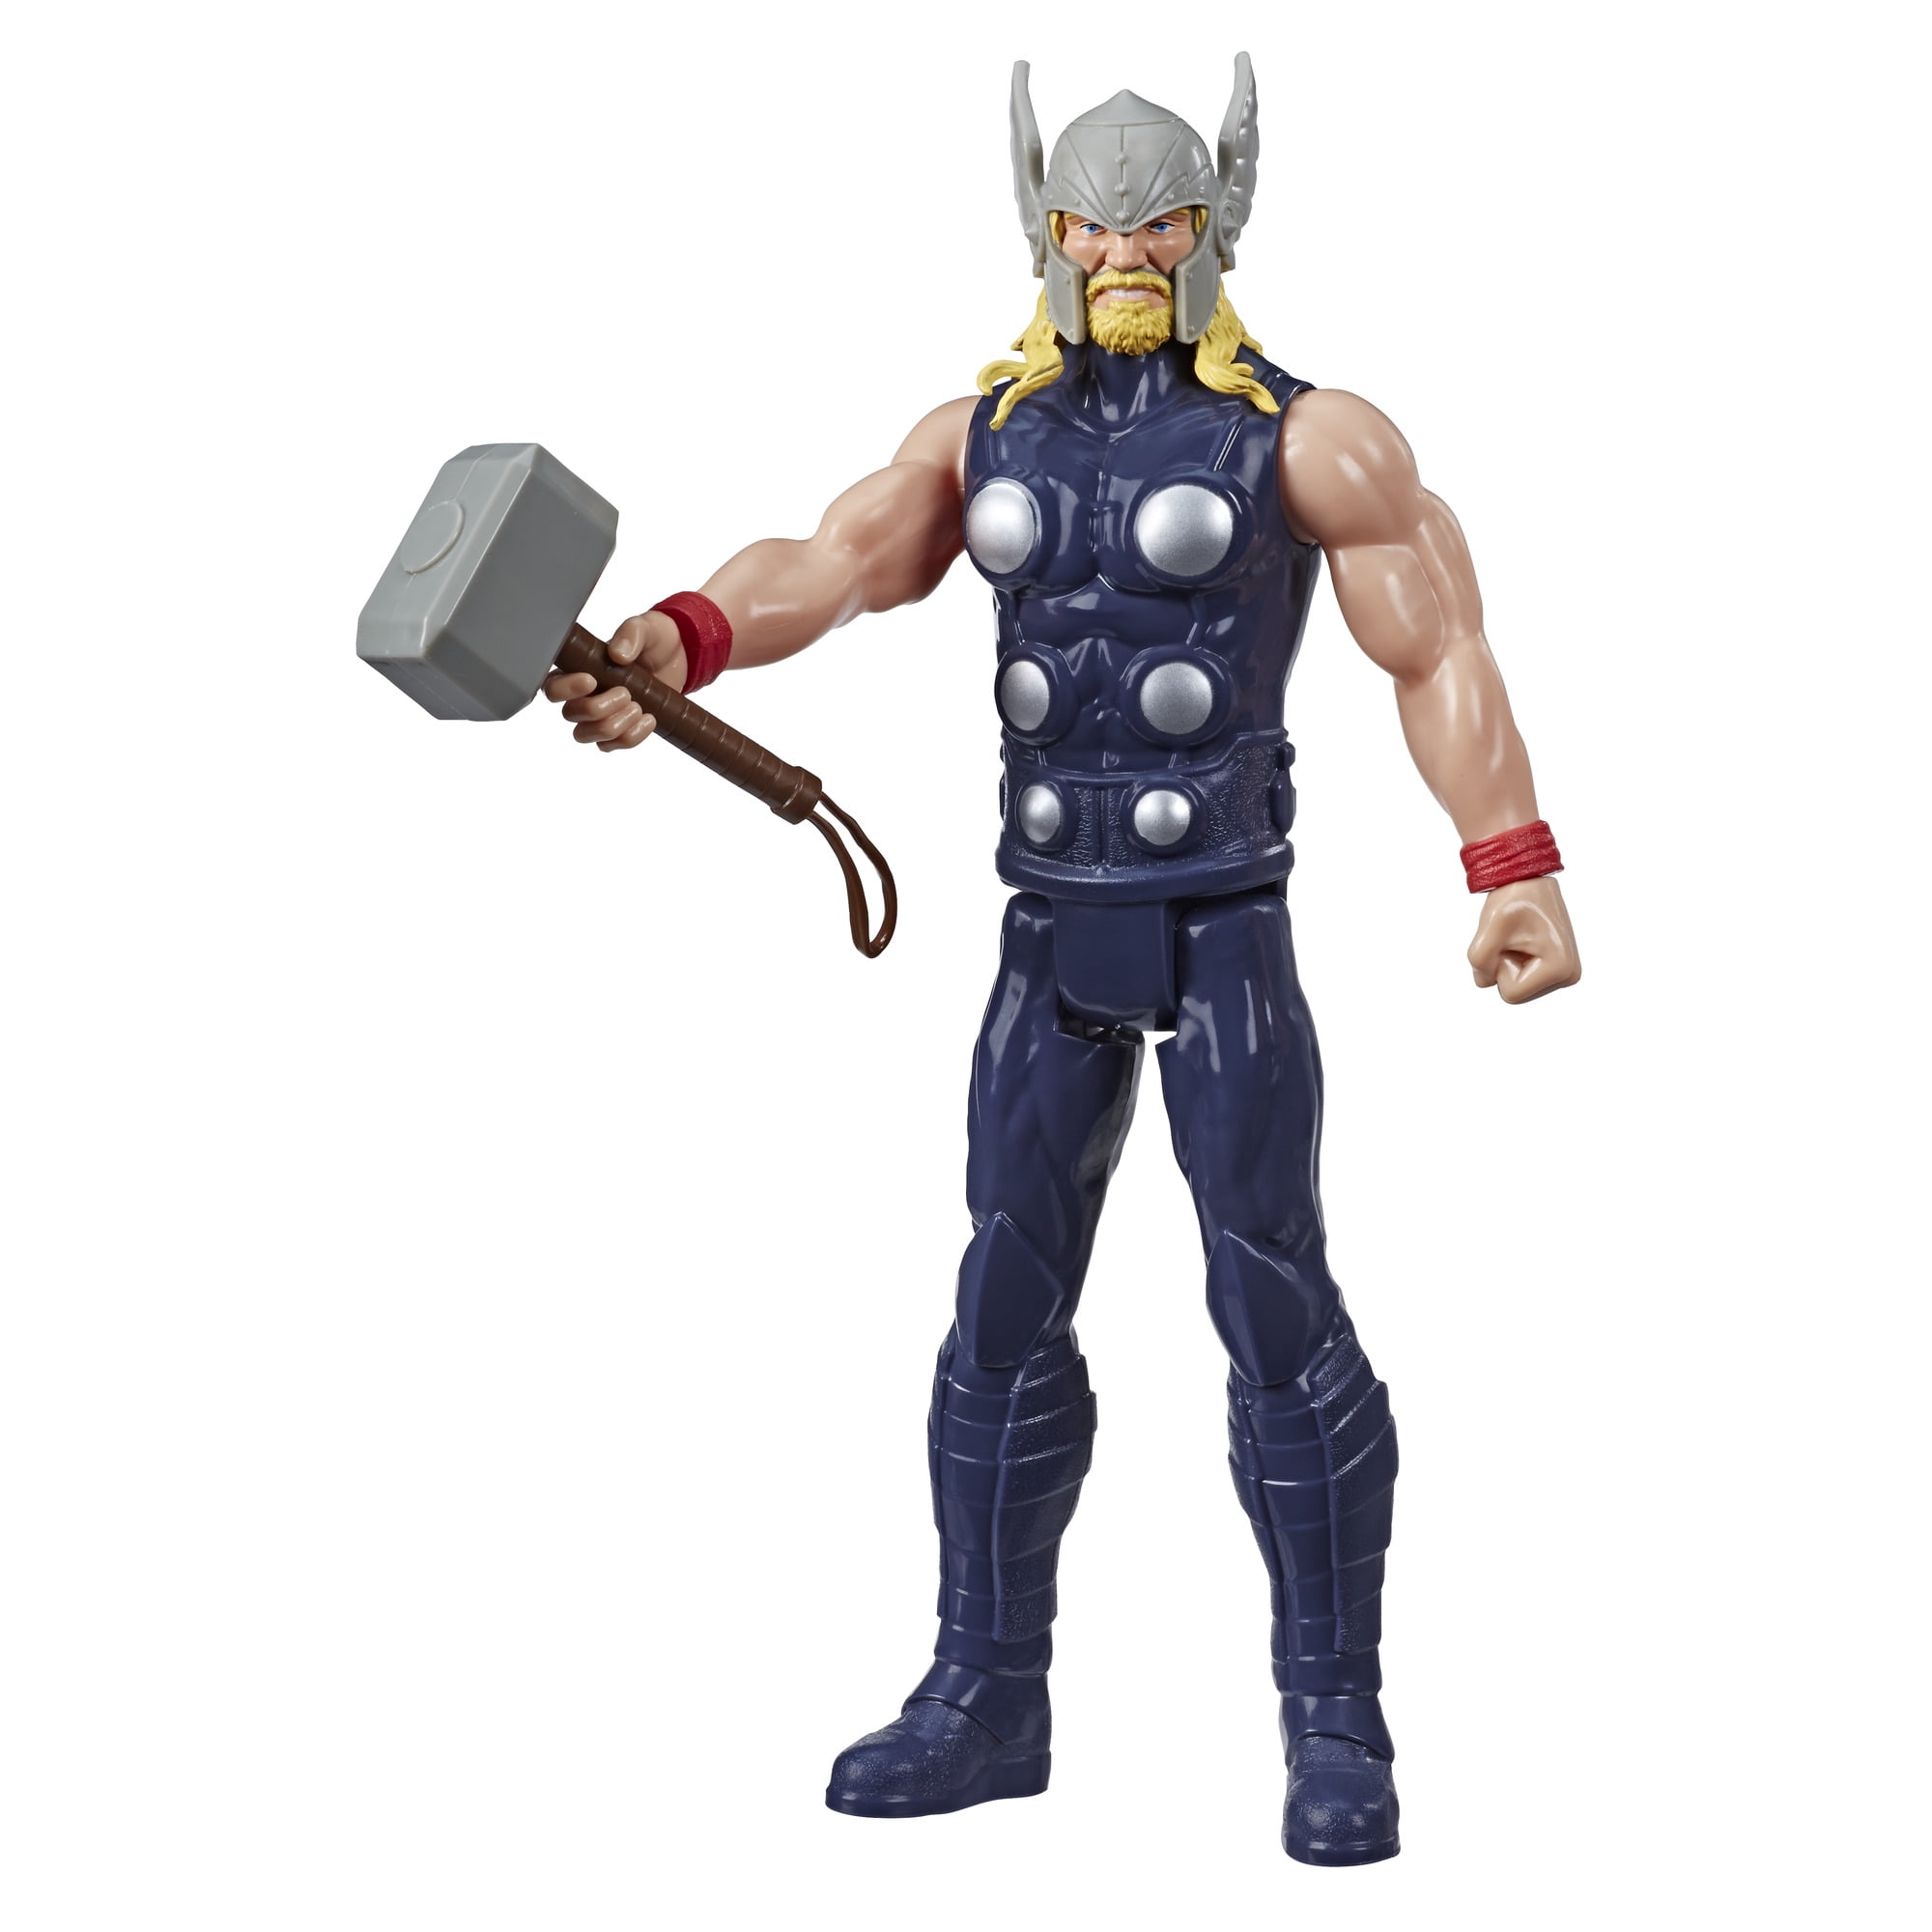 12' Hasbro Marvel Avengers Endgame Titan Hero Series Thor Action Figure Doll Toy 